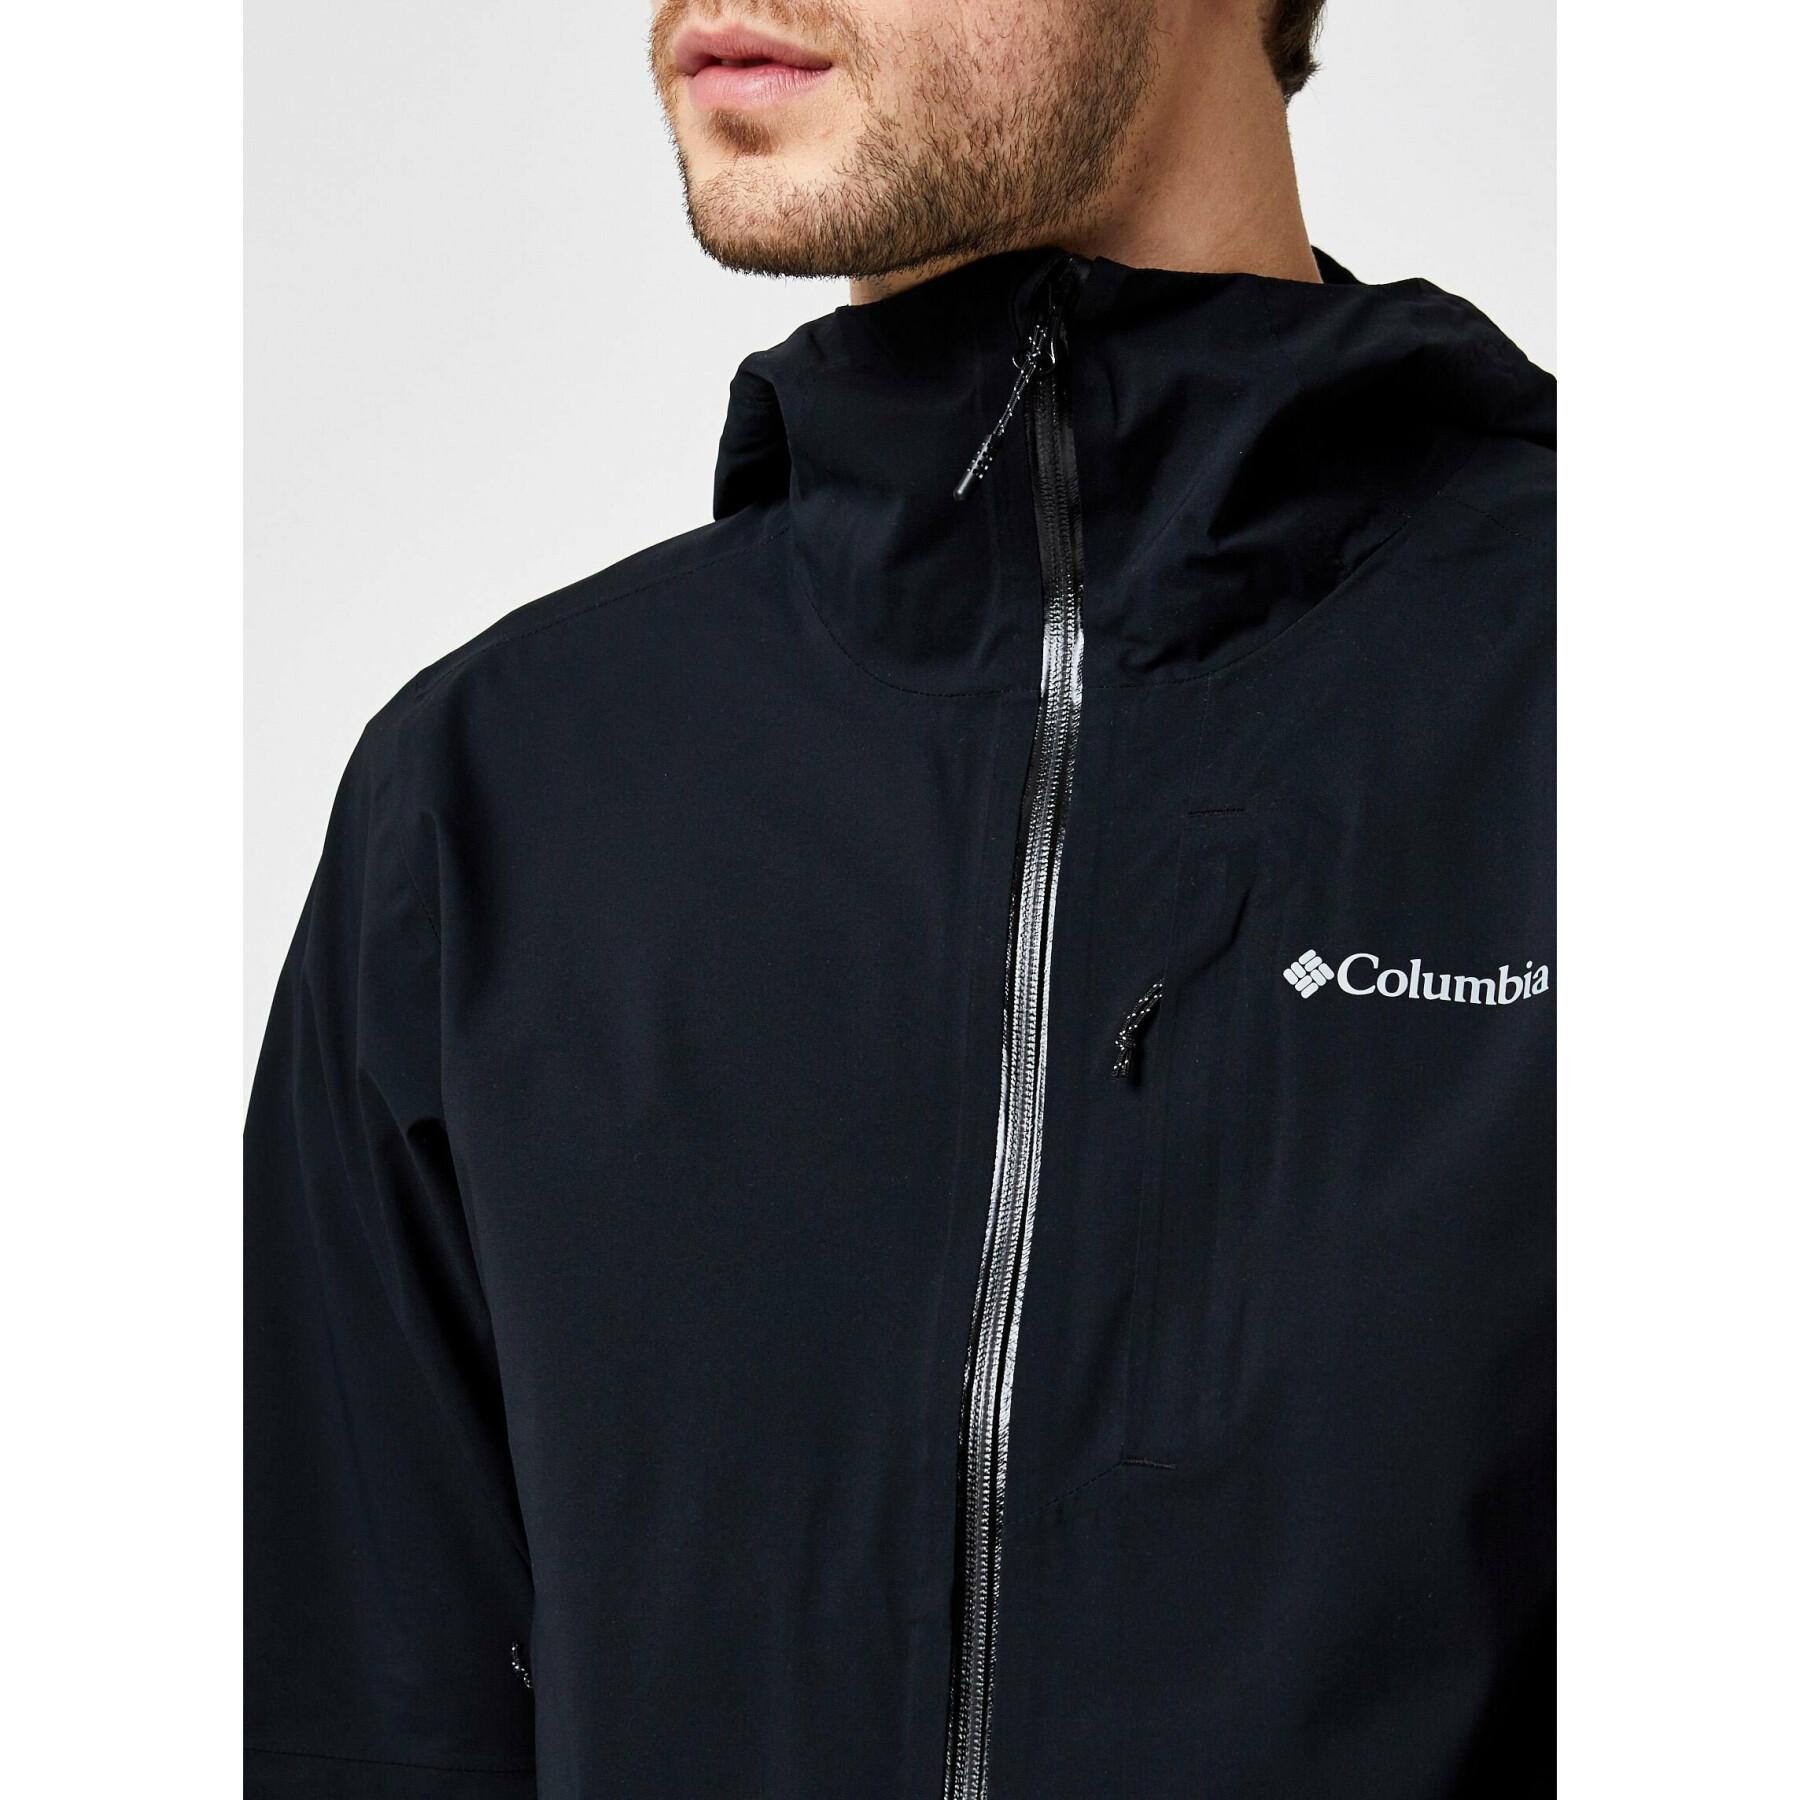 Waterproof jacket Columbia Omni-Tech Ampli-Dry Shell